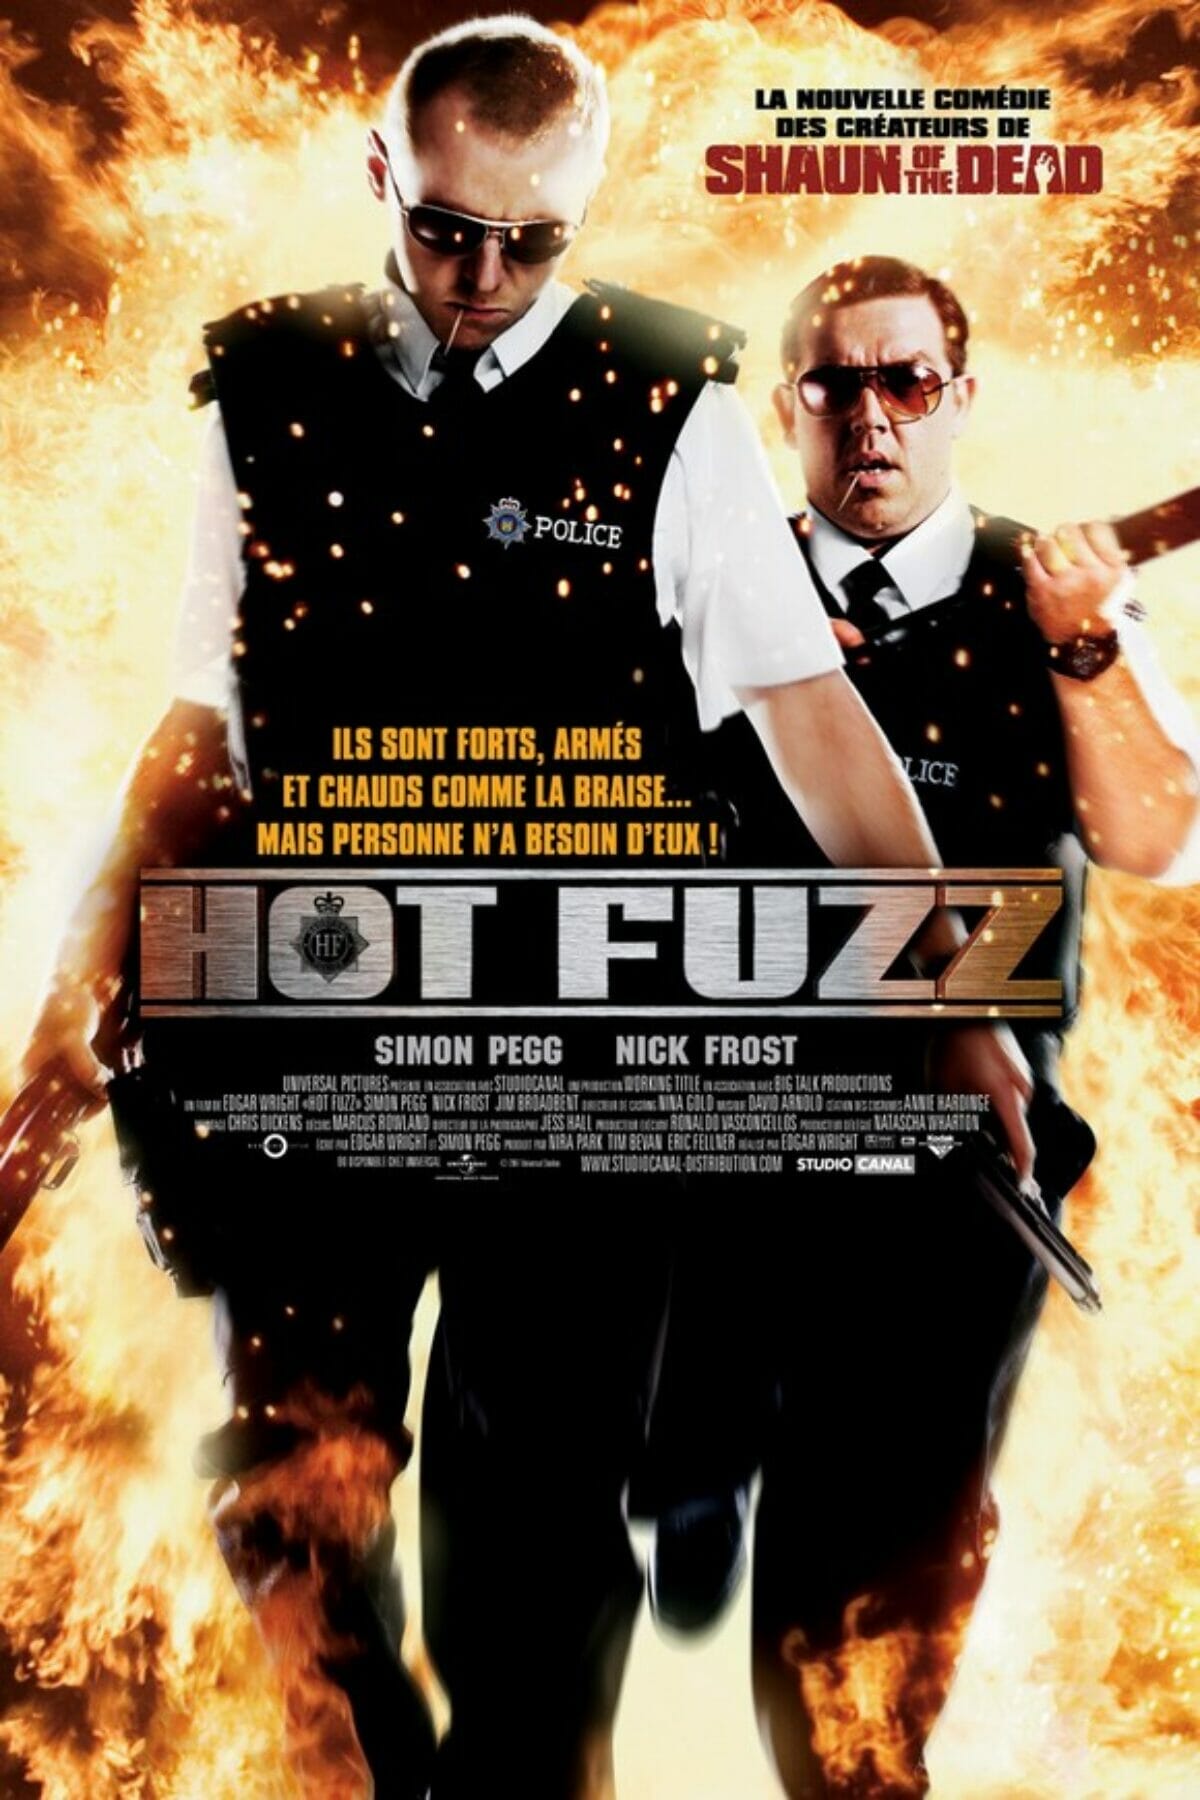 Hot-fuzz-affiche-poster-France